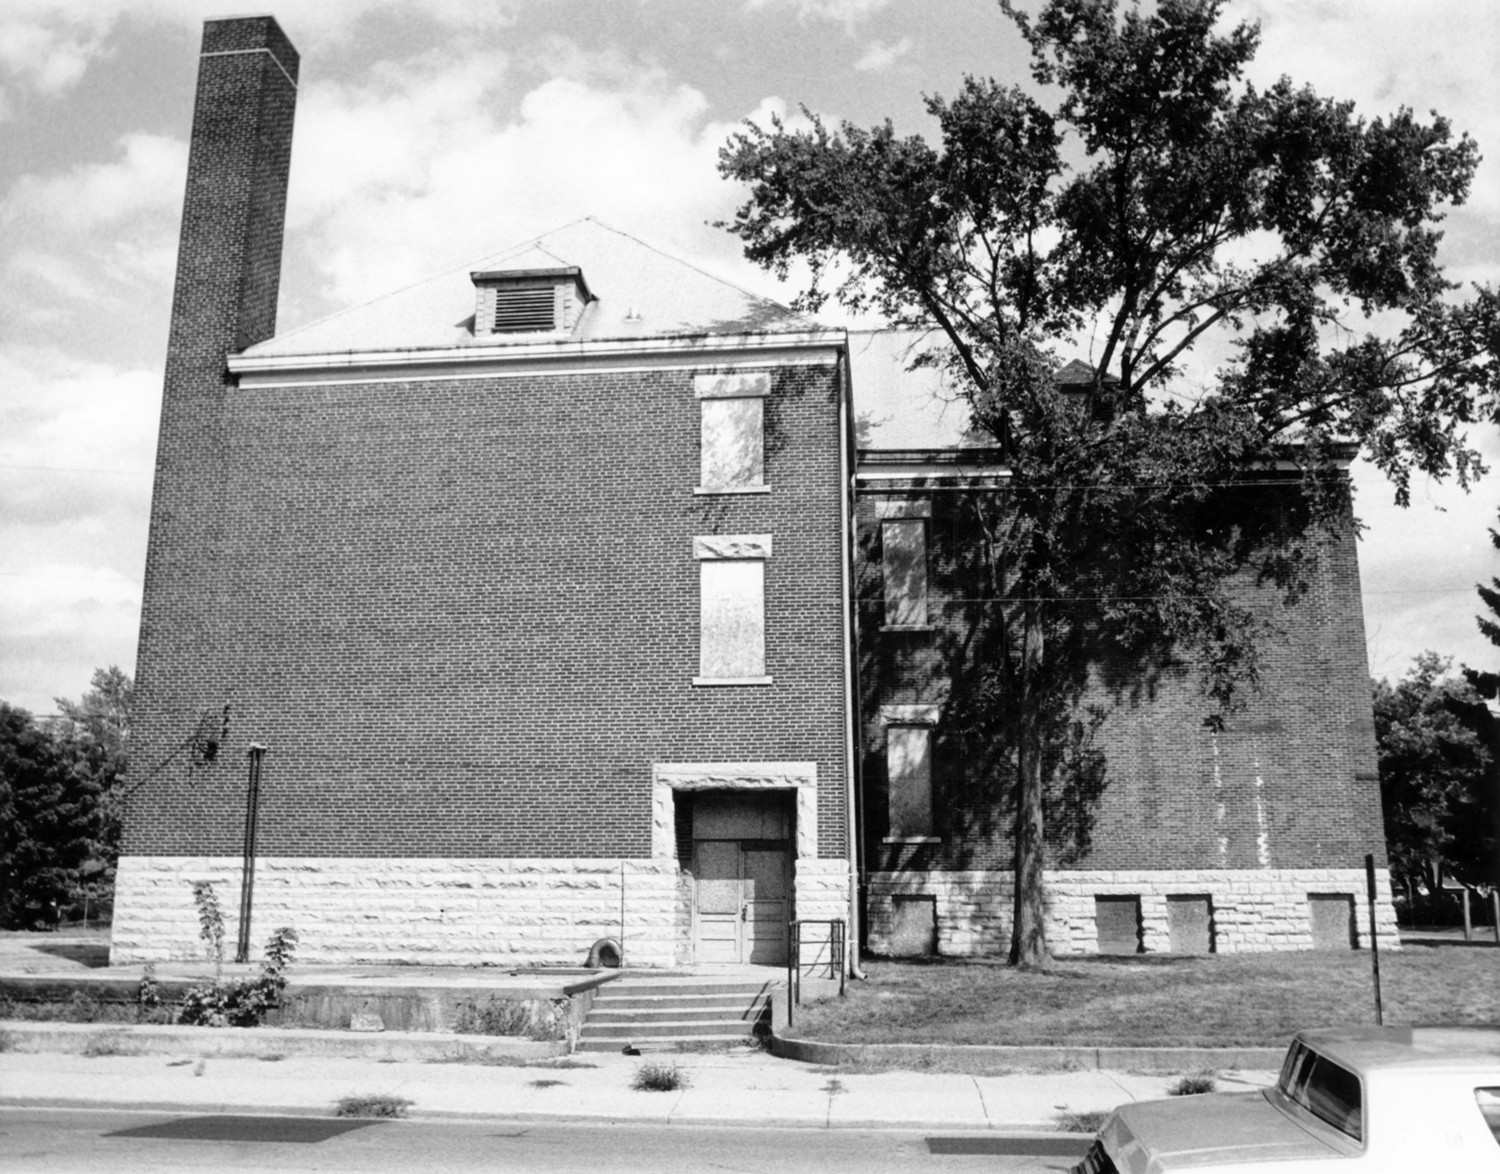 McKinley School - North Side School, Columbus Indiana Looking East (1987)